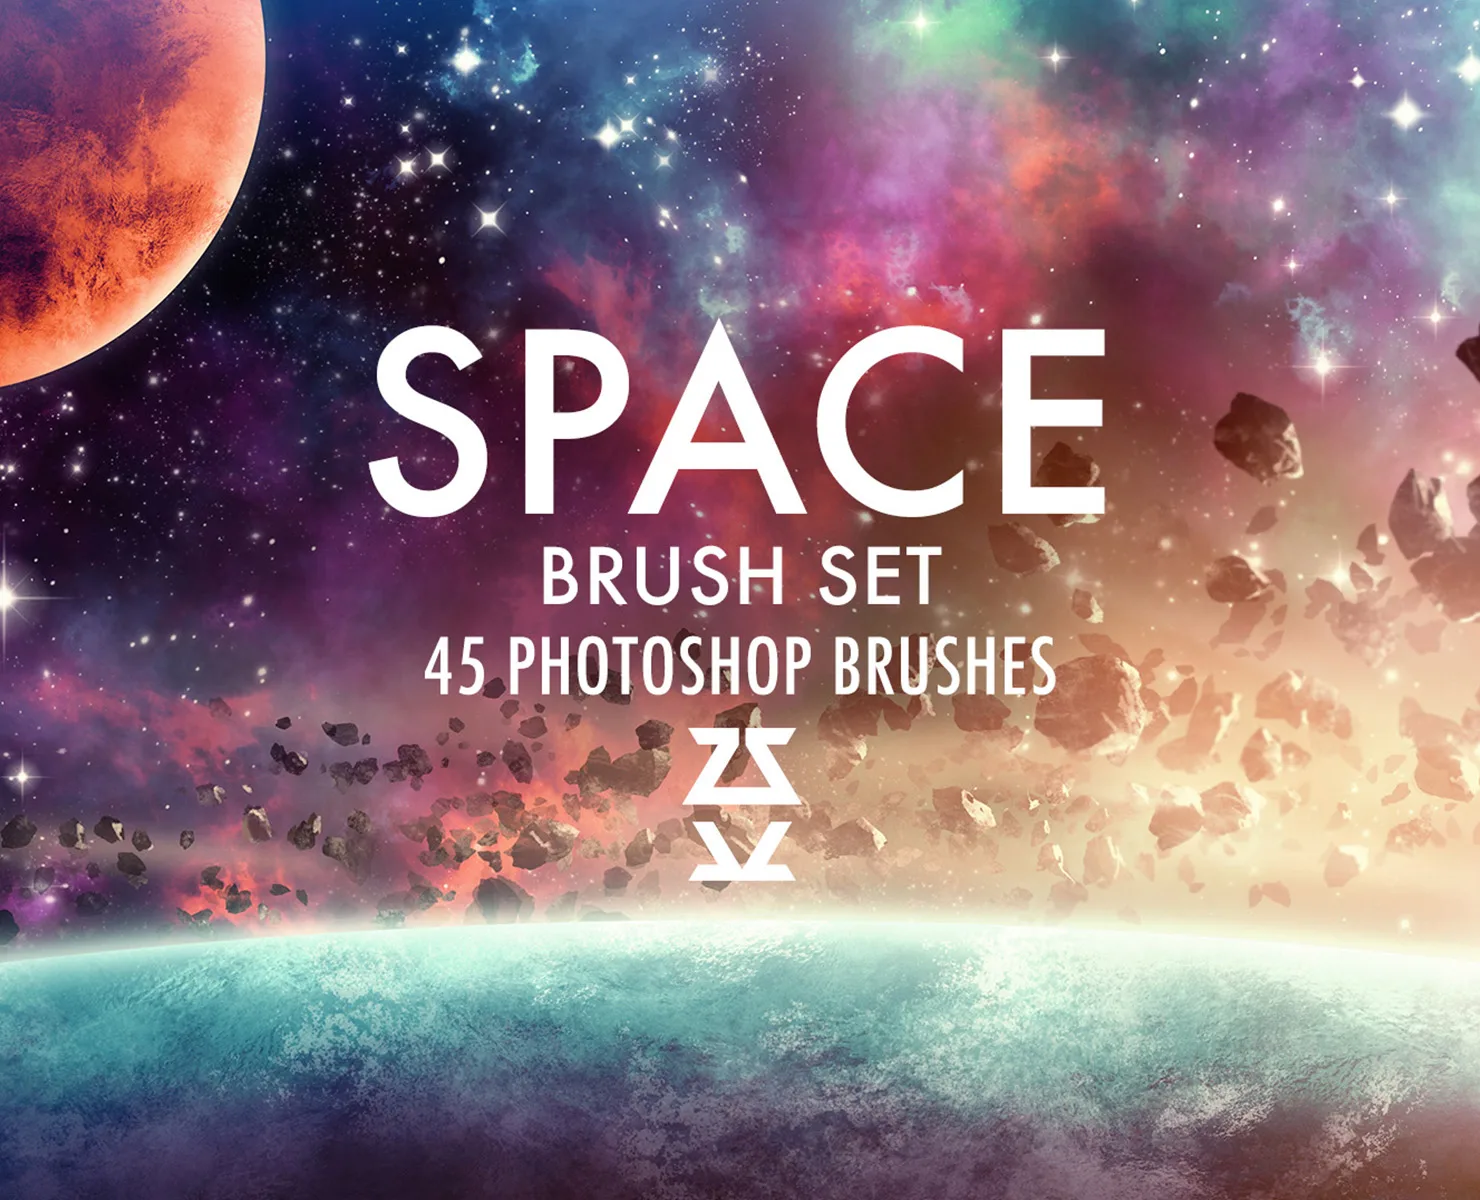 Space Brush Set